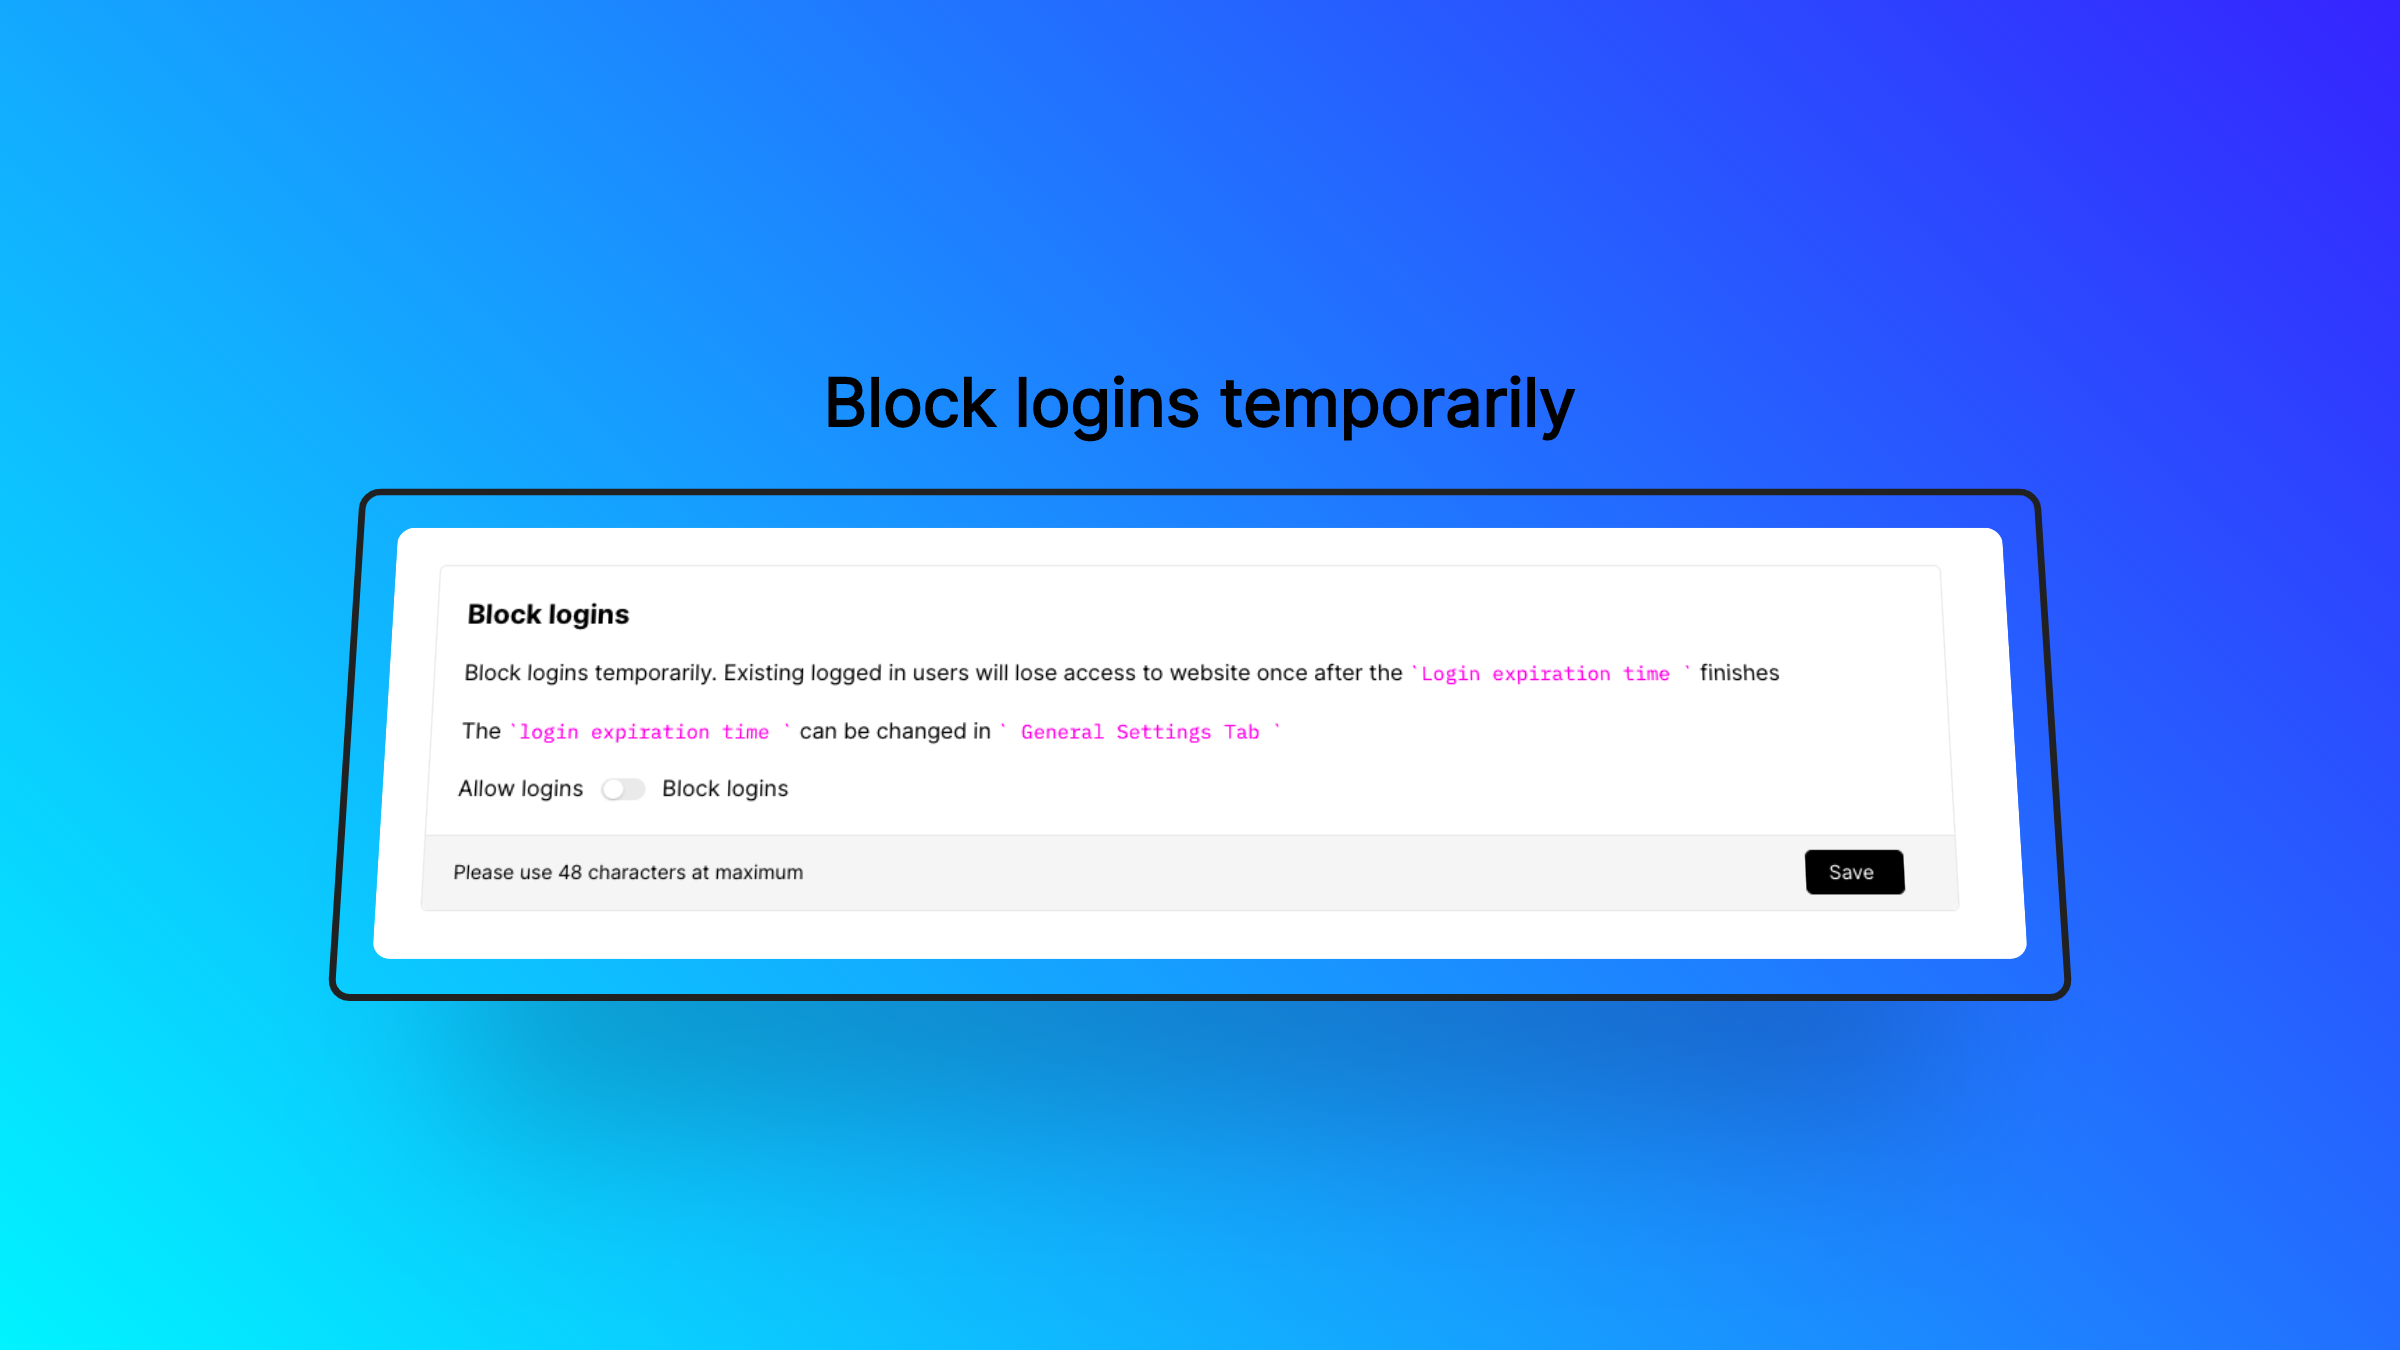 Block logins